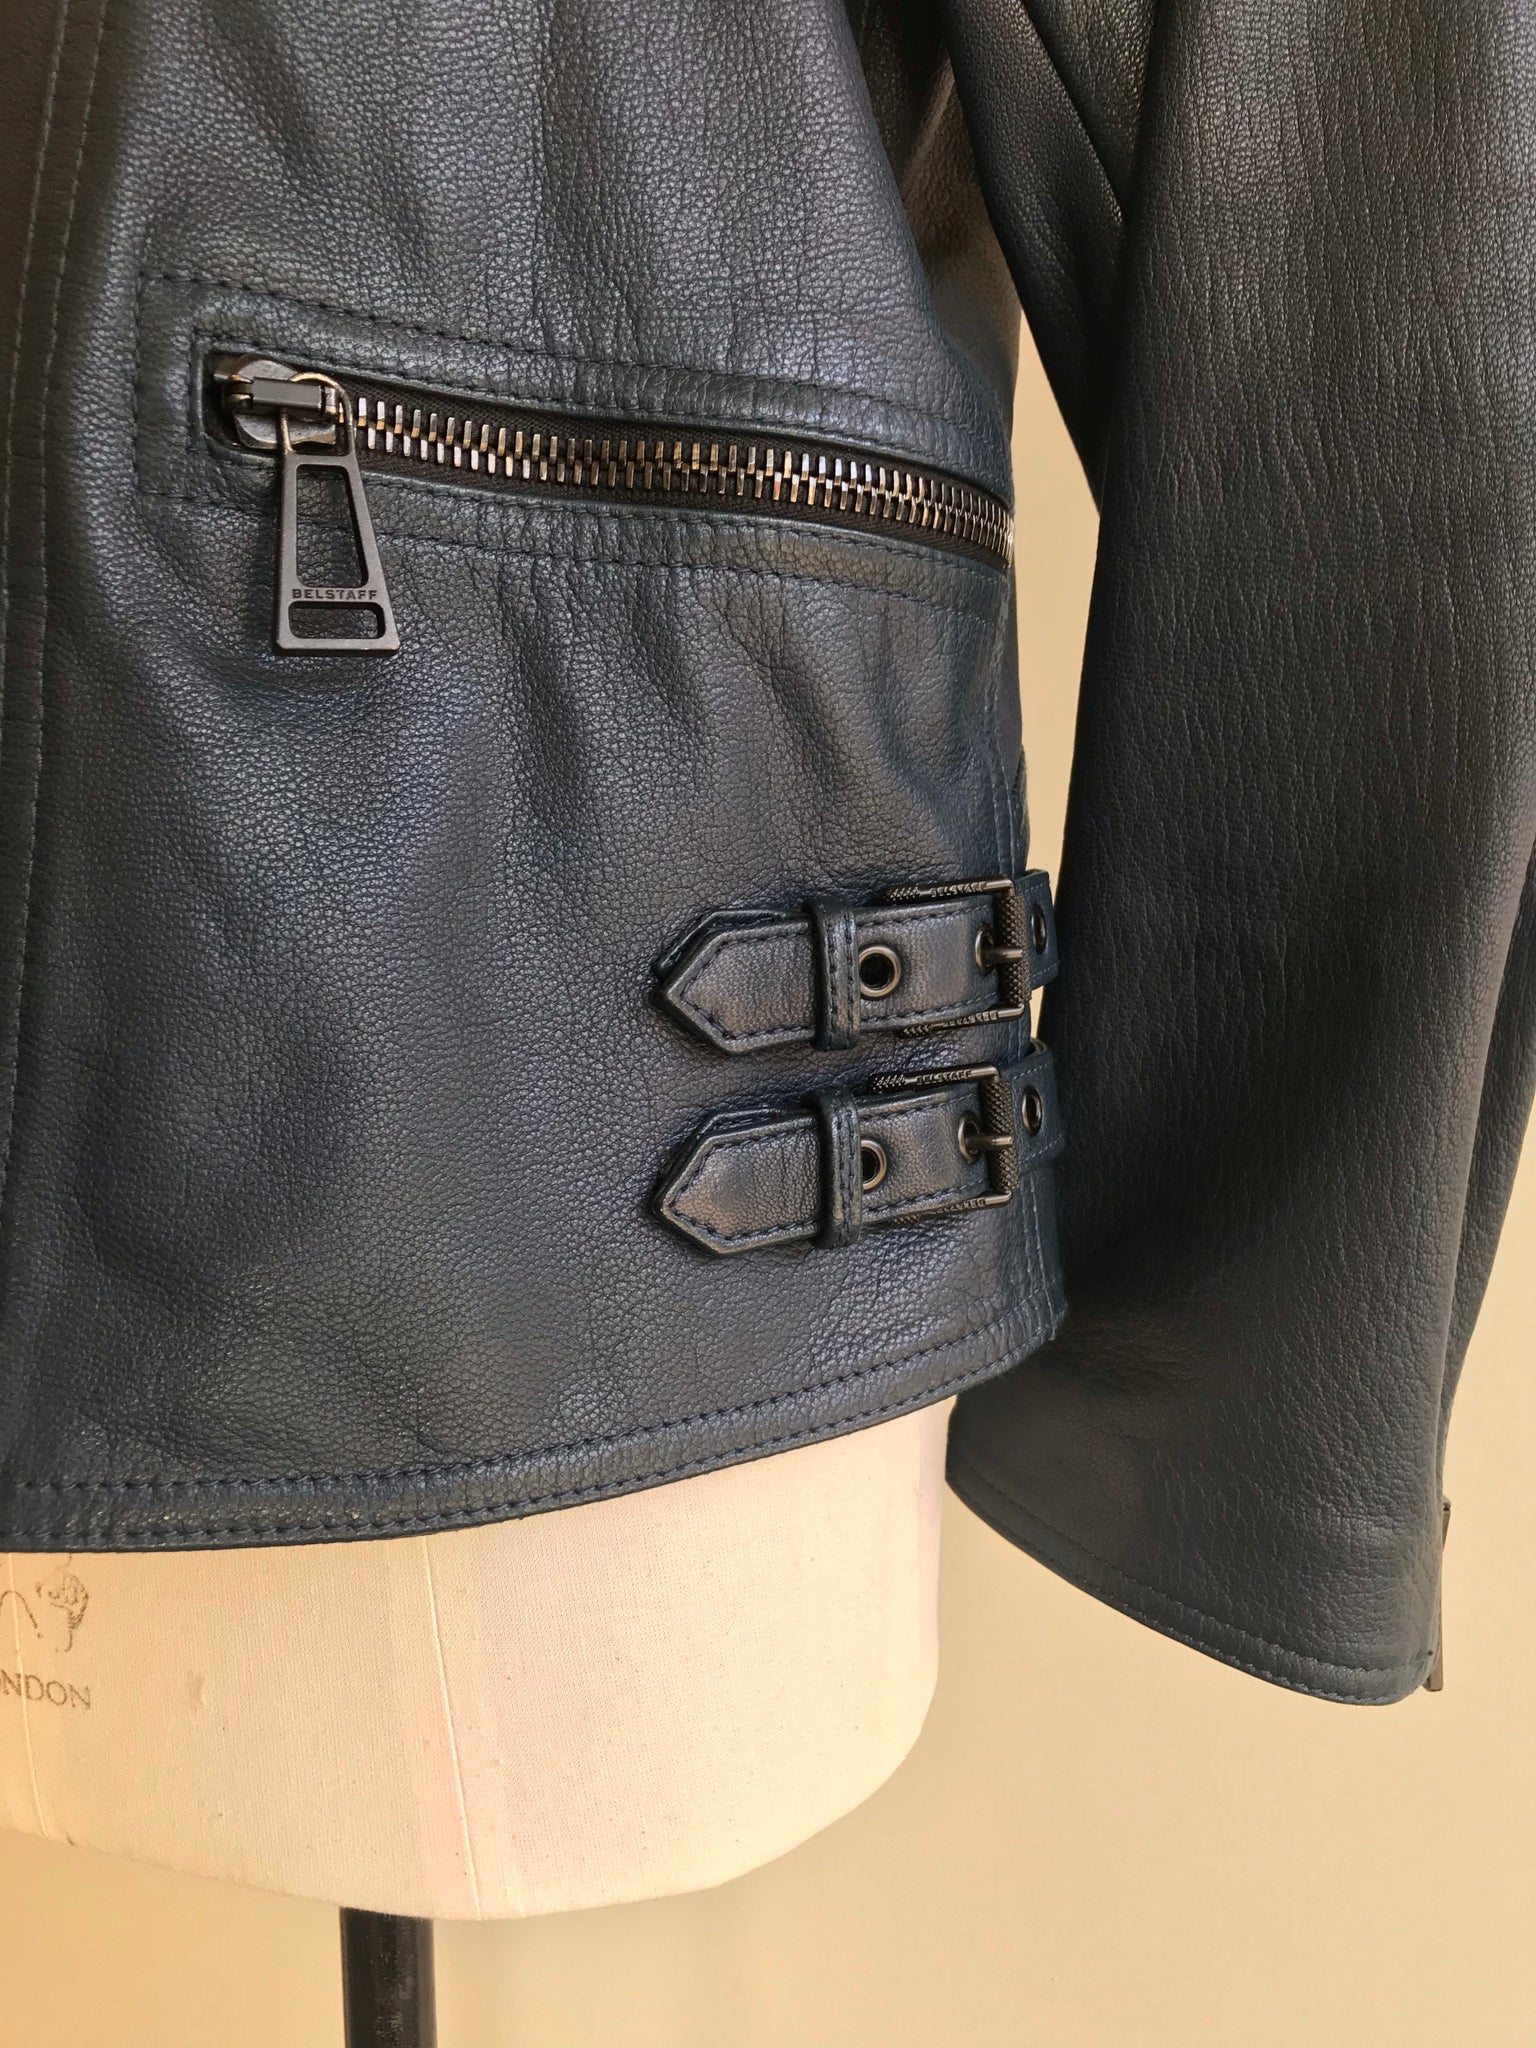 Isabella's Wardrobe Belstaff Gents Navy Leather Biker Jacket.